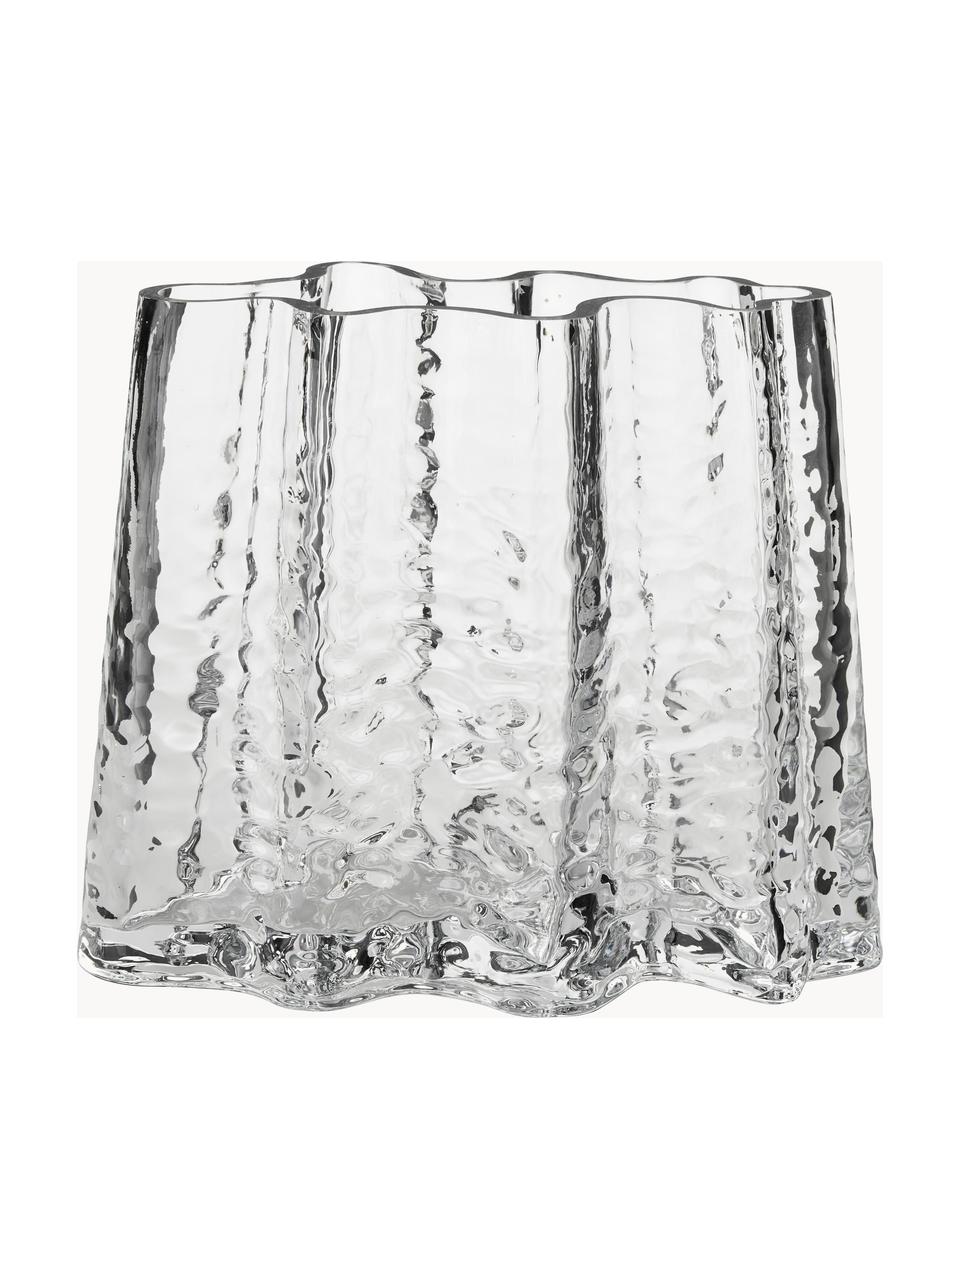 Mondgeblazen glazen vaas Gry met gestructureerde oppervlak, H 19 cm, Mondgeblazen glas, Transparant, B 24 x H 19 cm